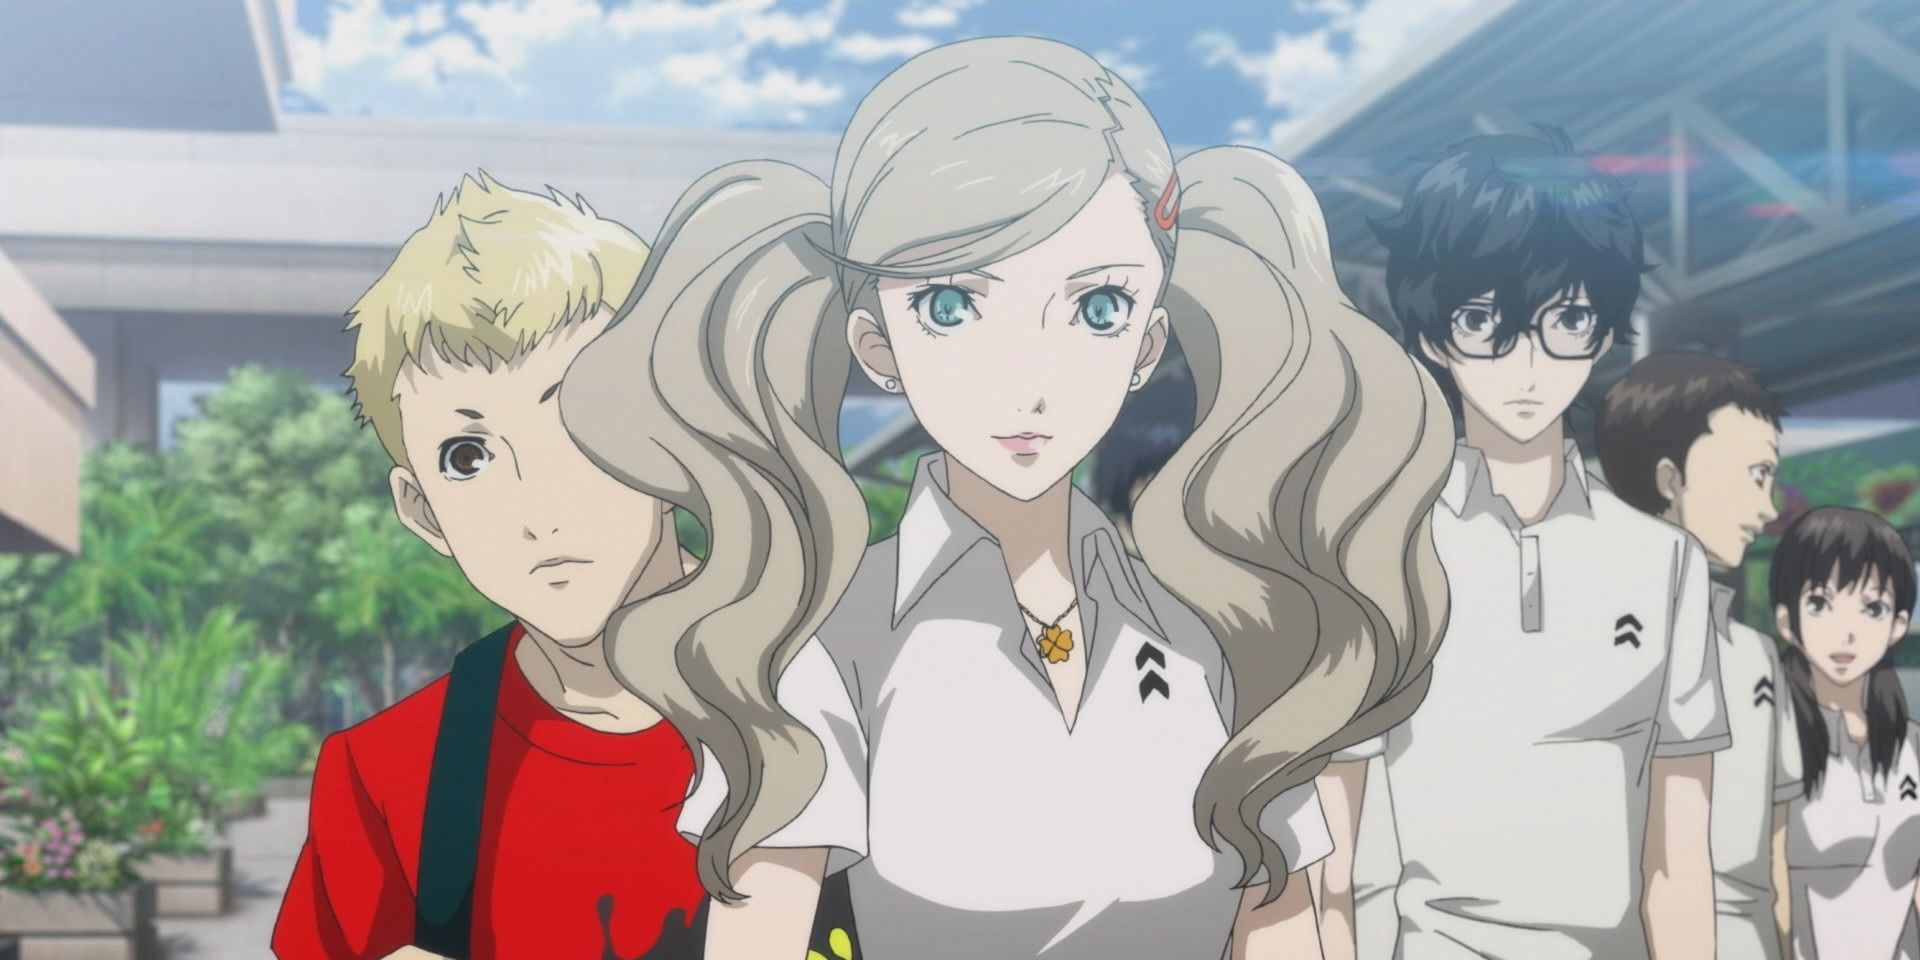 Ryuji, Ann, and Joker at school in Persona 5 Royal